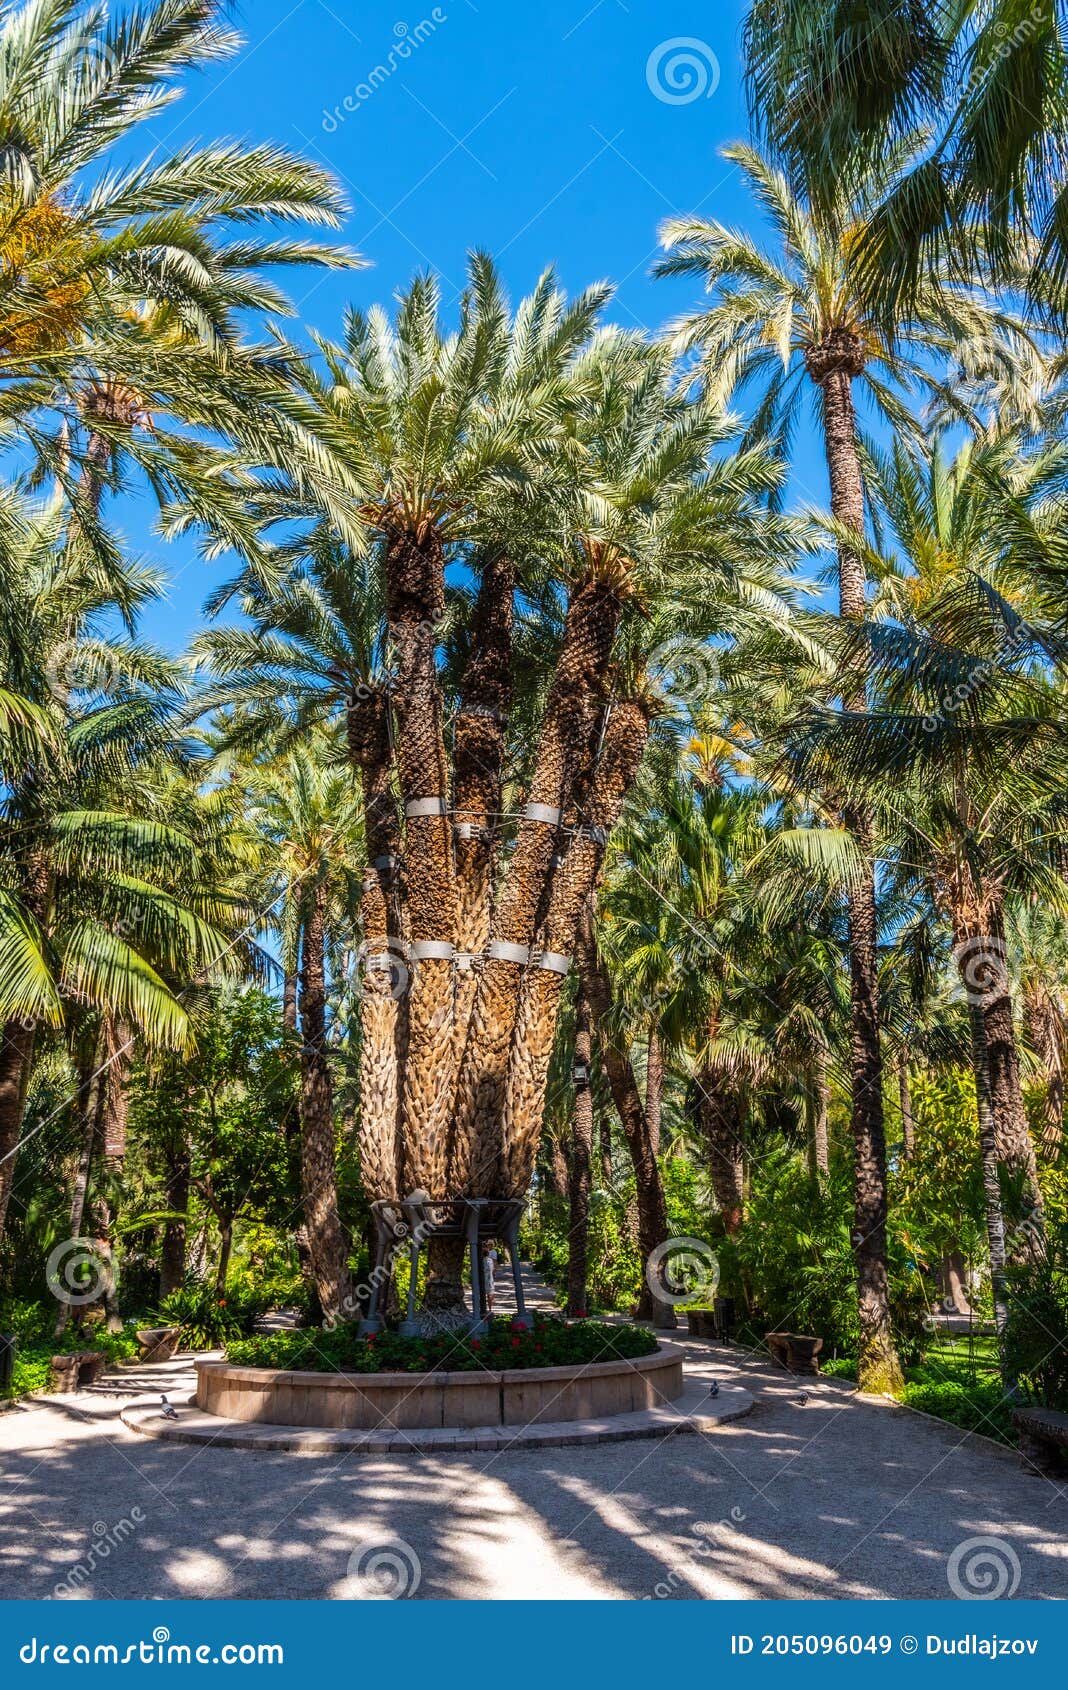 palm groves at huerto del cura garden in elche